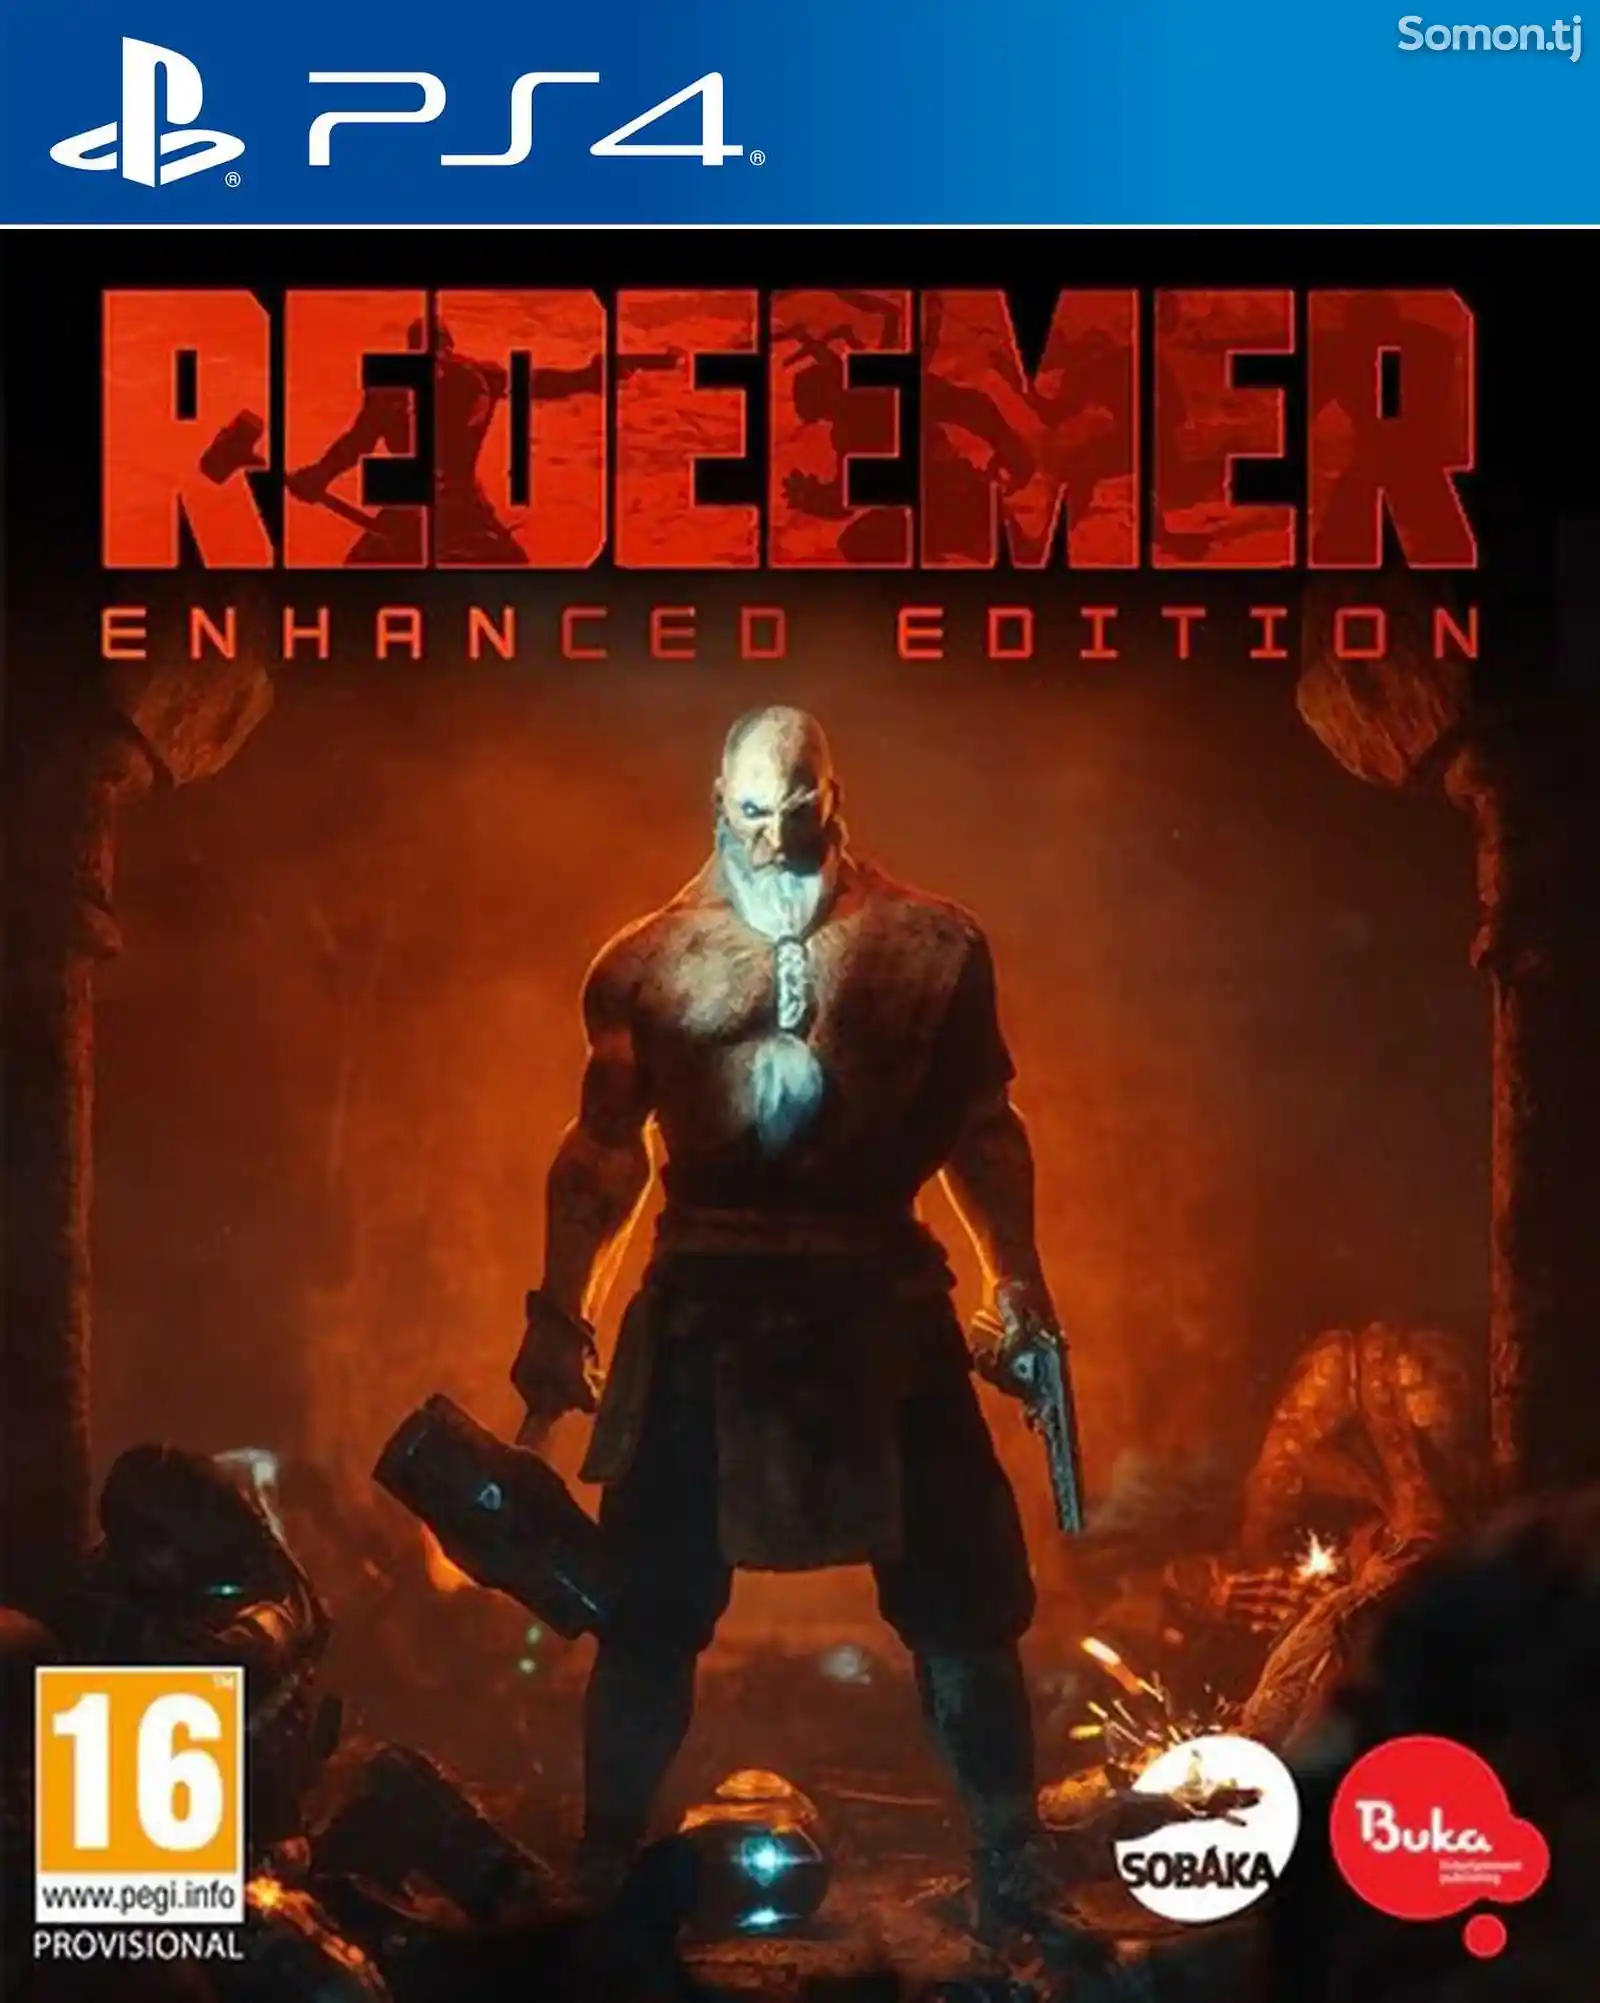 Игра Redeemer enhanced edition для PS-4 / 5.05 / 6.72 / 7.02 / 7.55 / 9.00 /-1